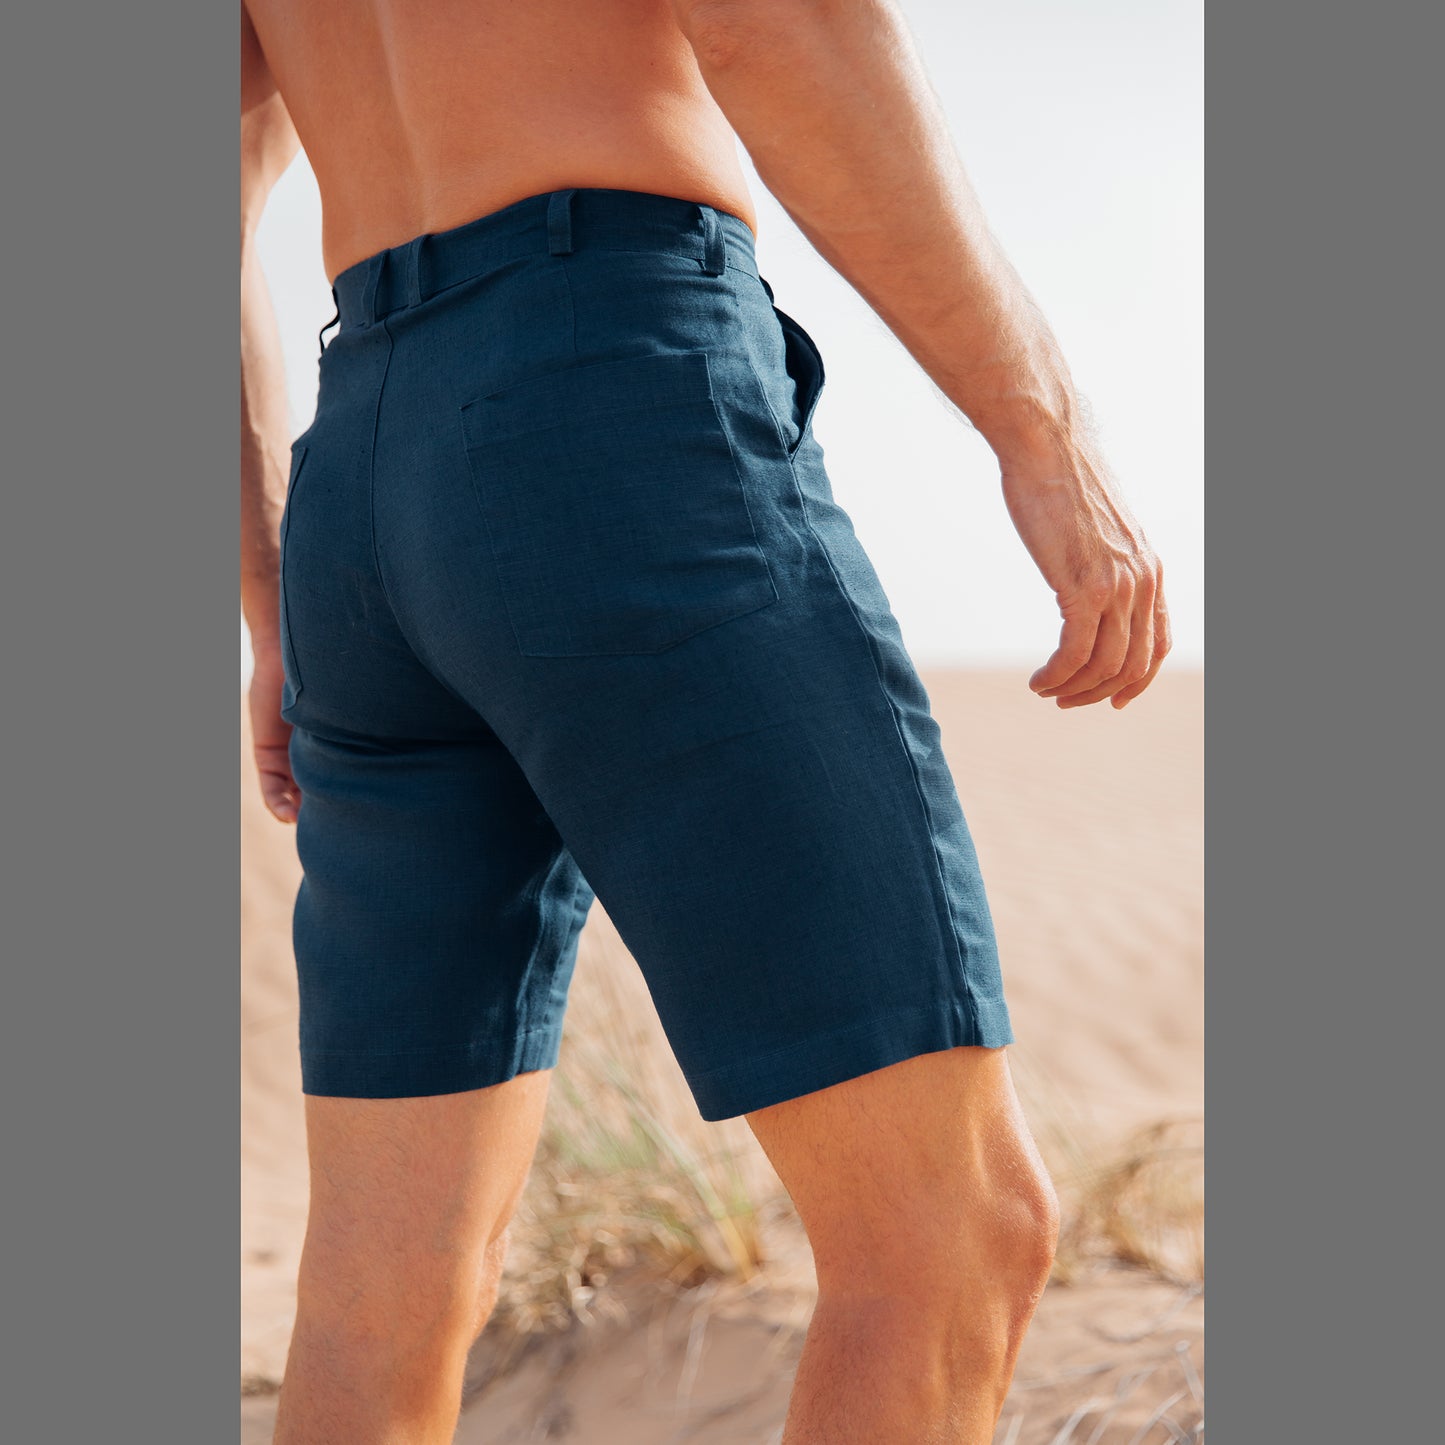 Shorts for Men (100% Hemp, Navy)